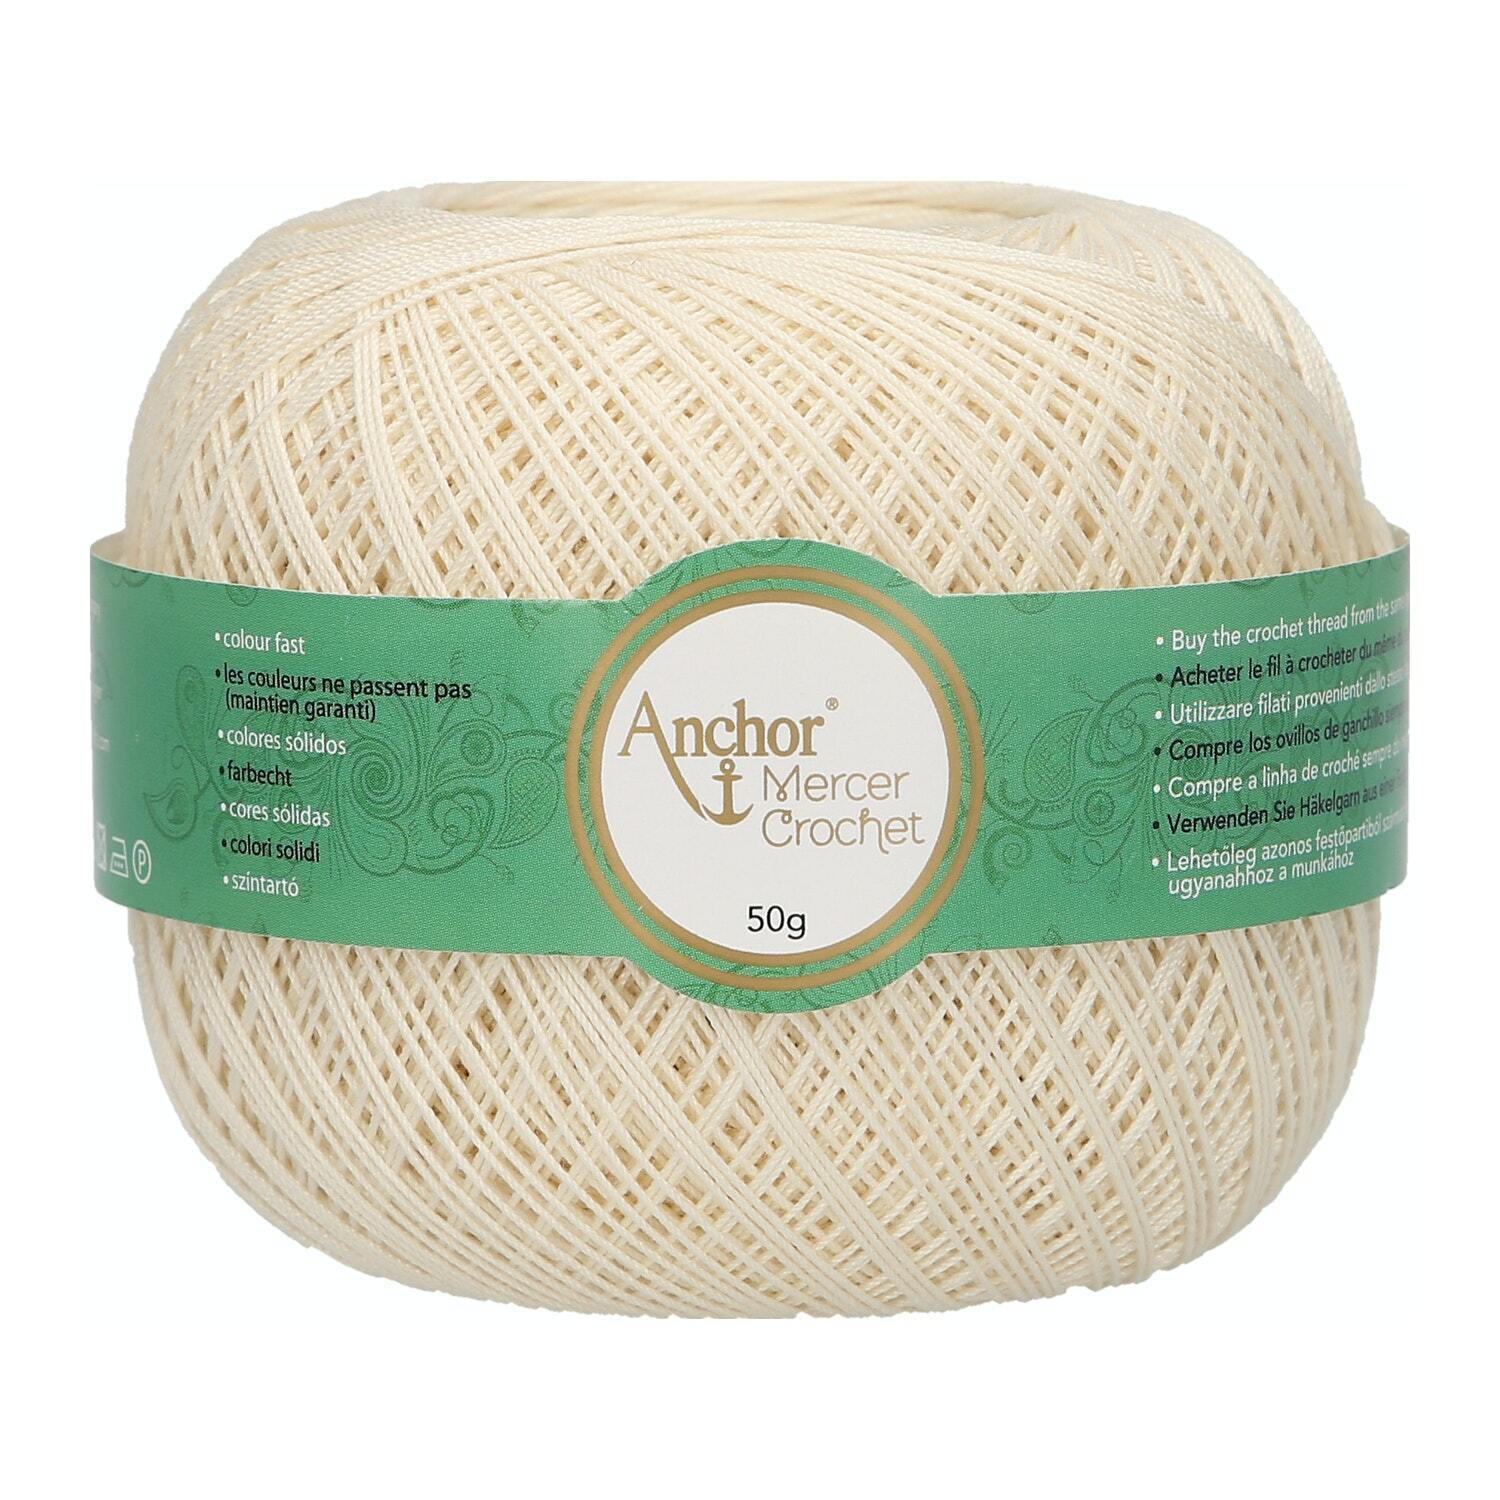 Anchor Mercer Crochet - Loja - MEZ Crafts